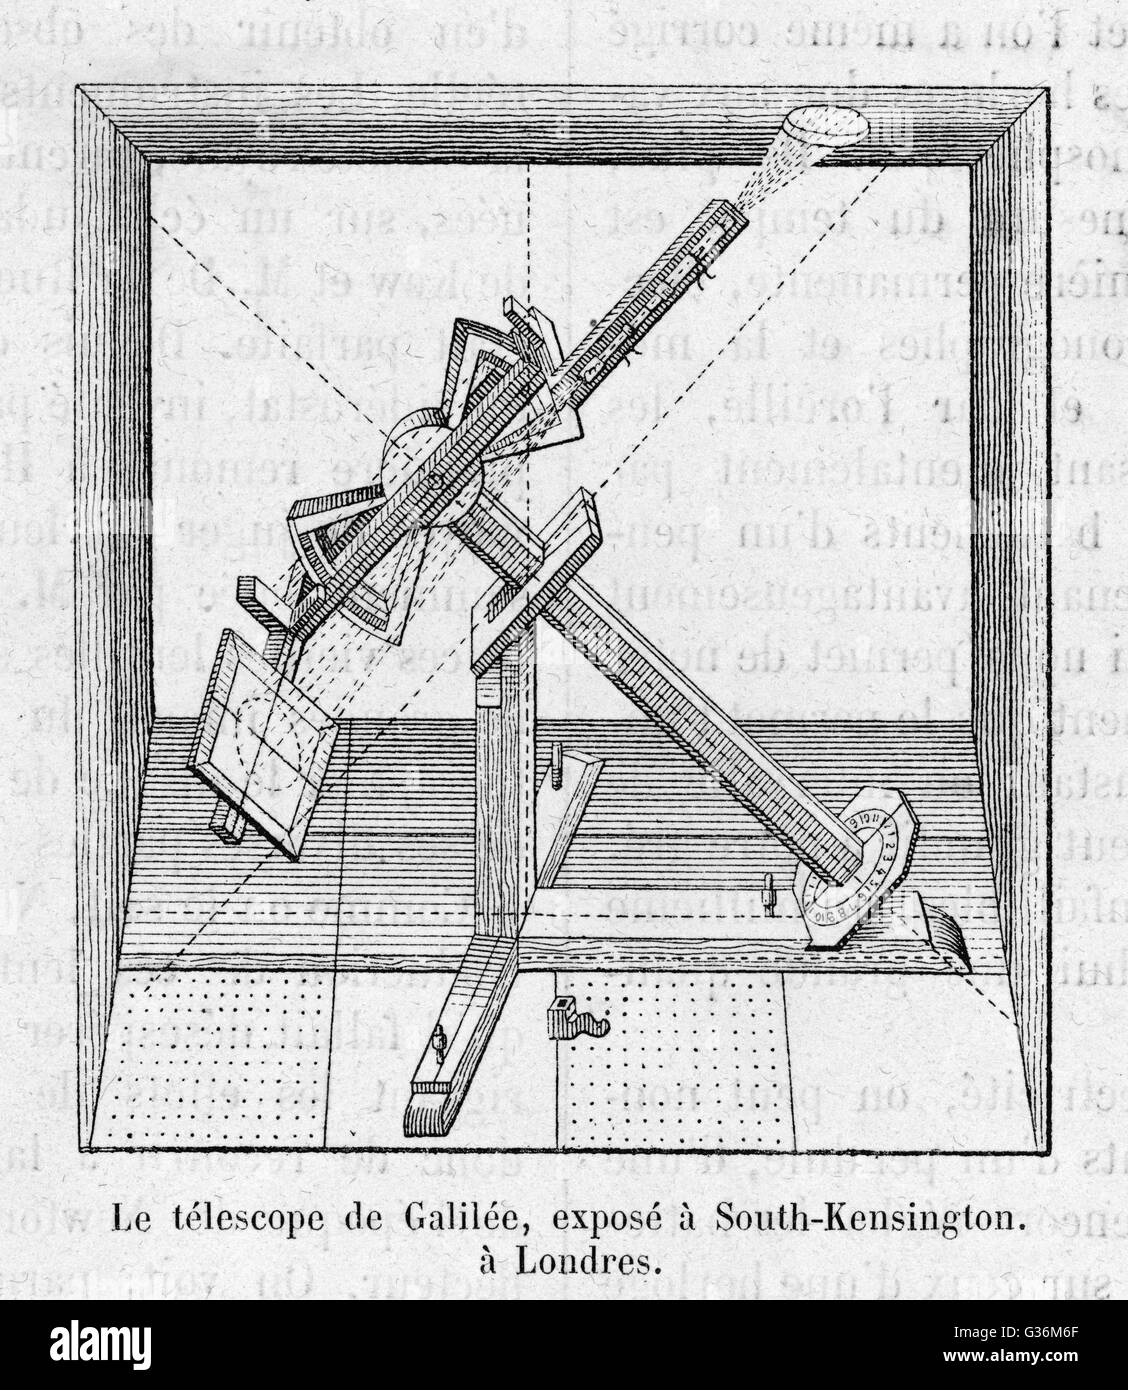 File:Thermomètre de Galilée.jpg - Wikimedia Commons